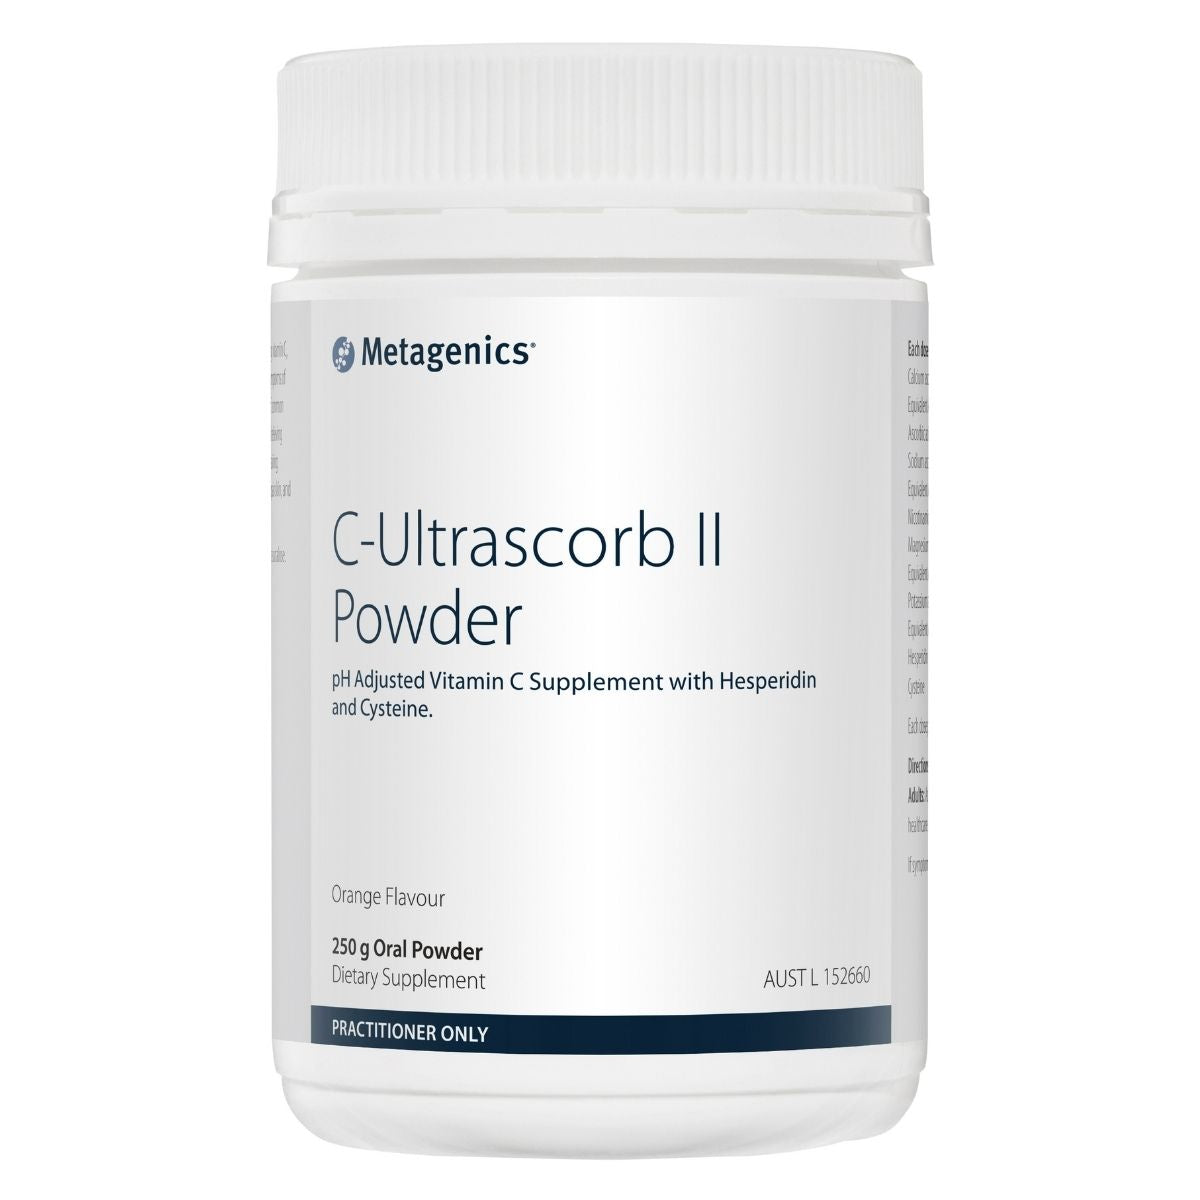 Metagenics C-Ultrascorb II 250g | Vitality and Wellness Centre